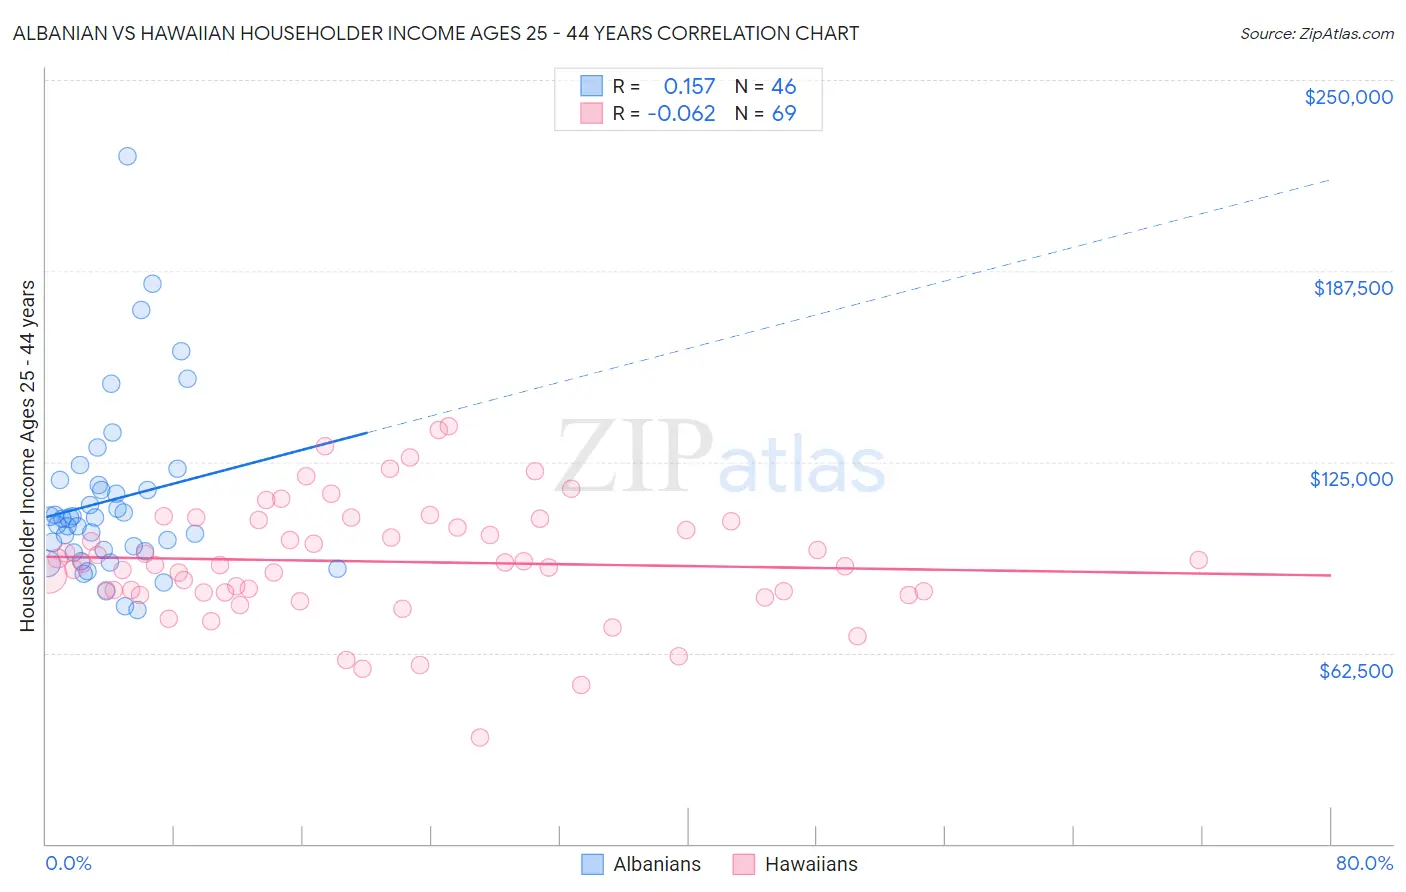 Albanian vs Hawaiian Householder Income Ages 25 - 44 years